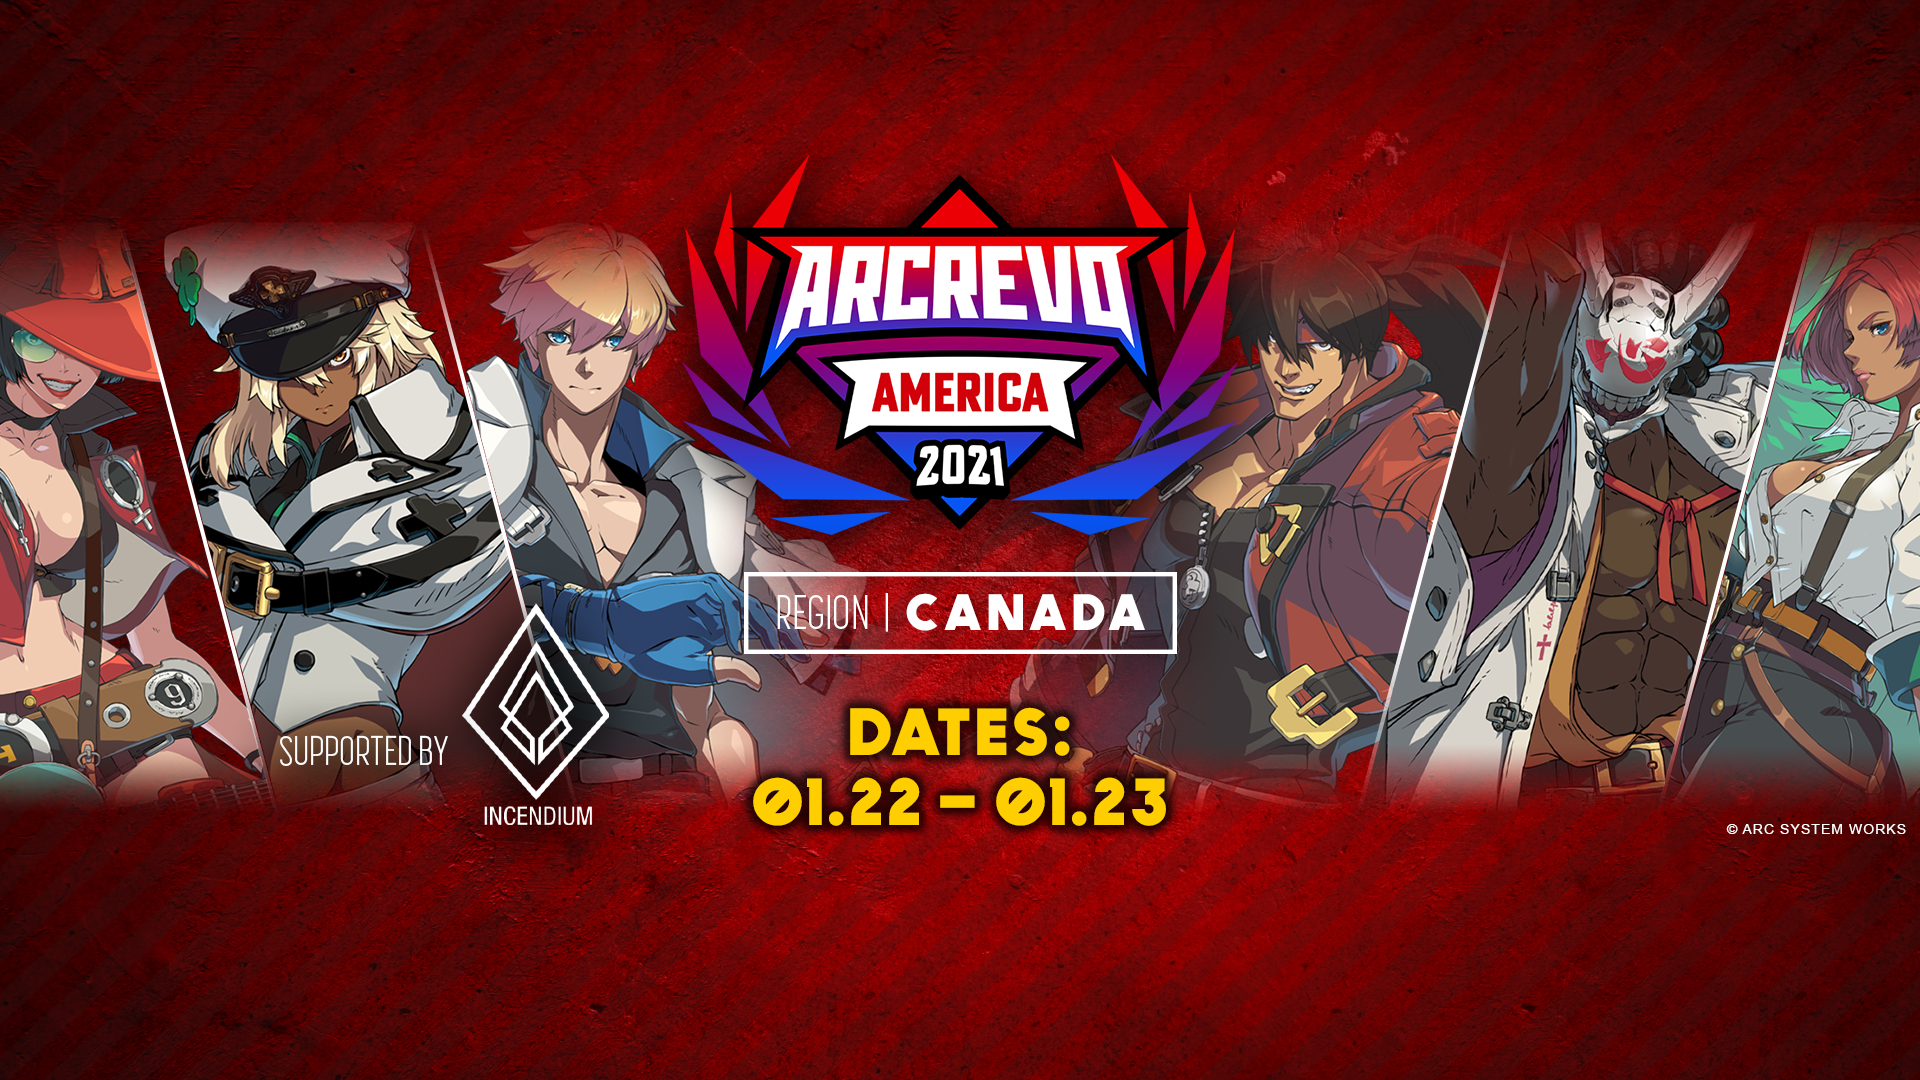 ARCREVO America 2021 – Canada